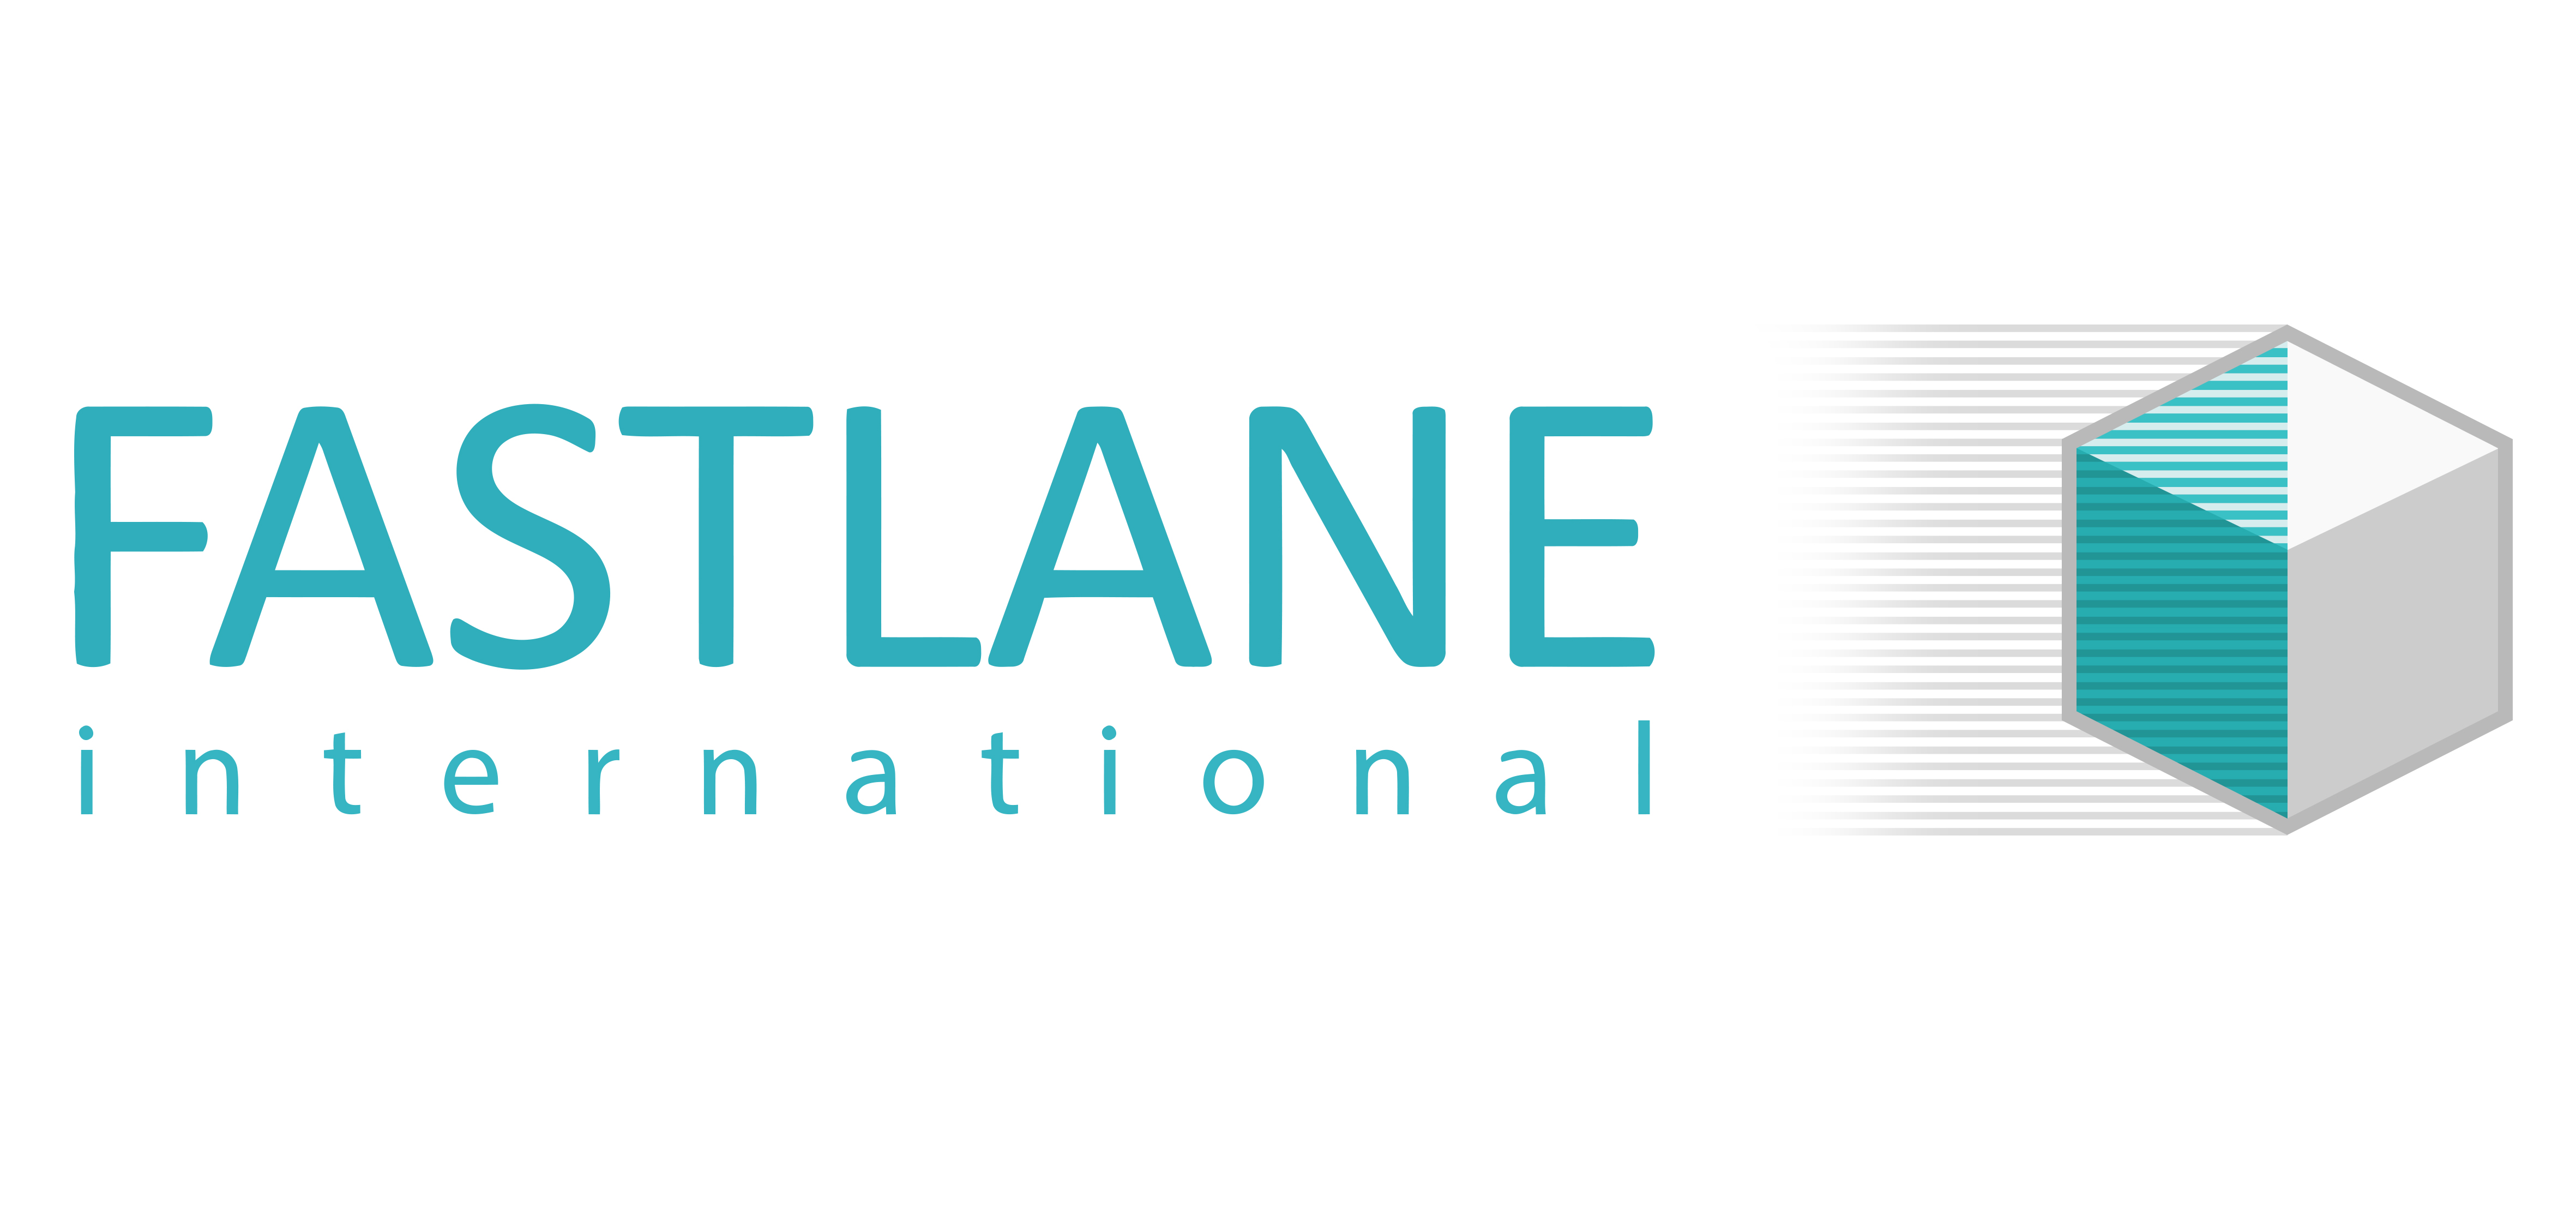 Fastlane International couriers